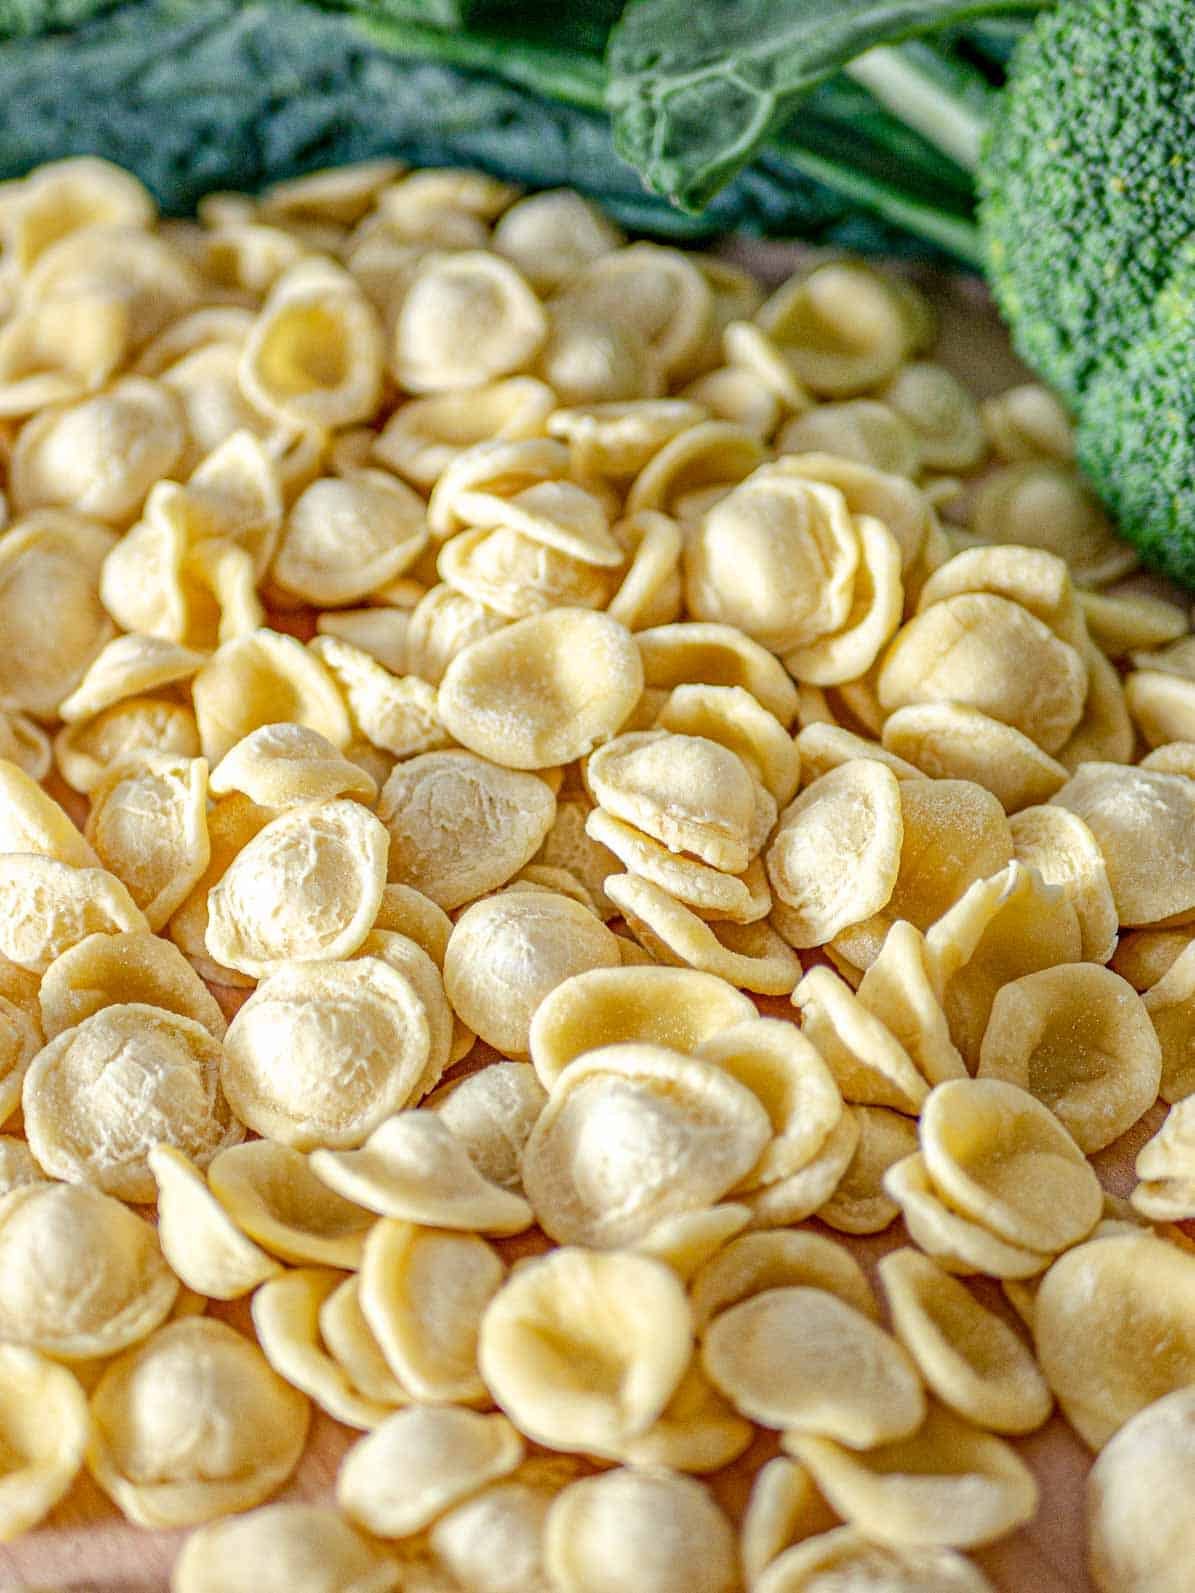 Homemade Orecchiette pasta with broccoli on the side